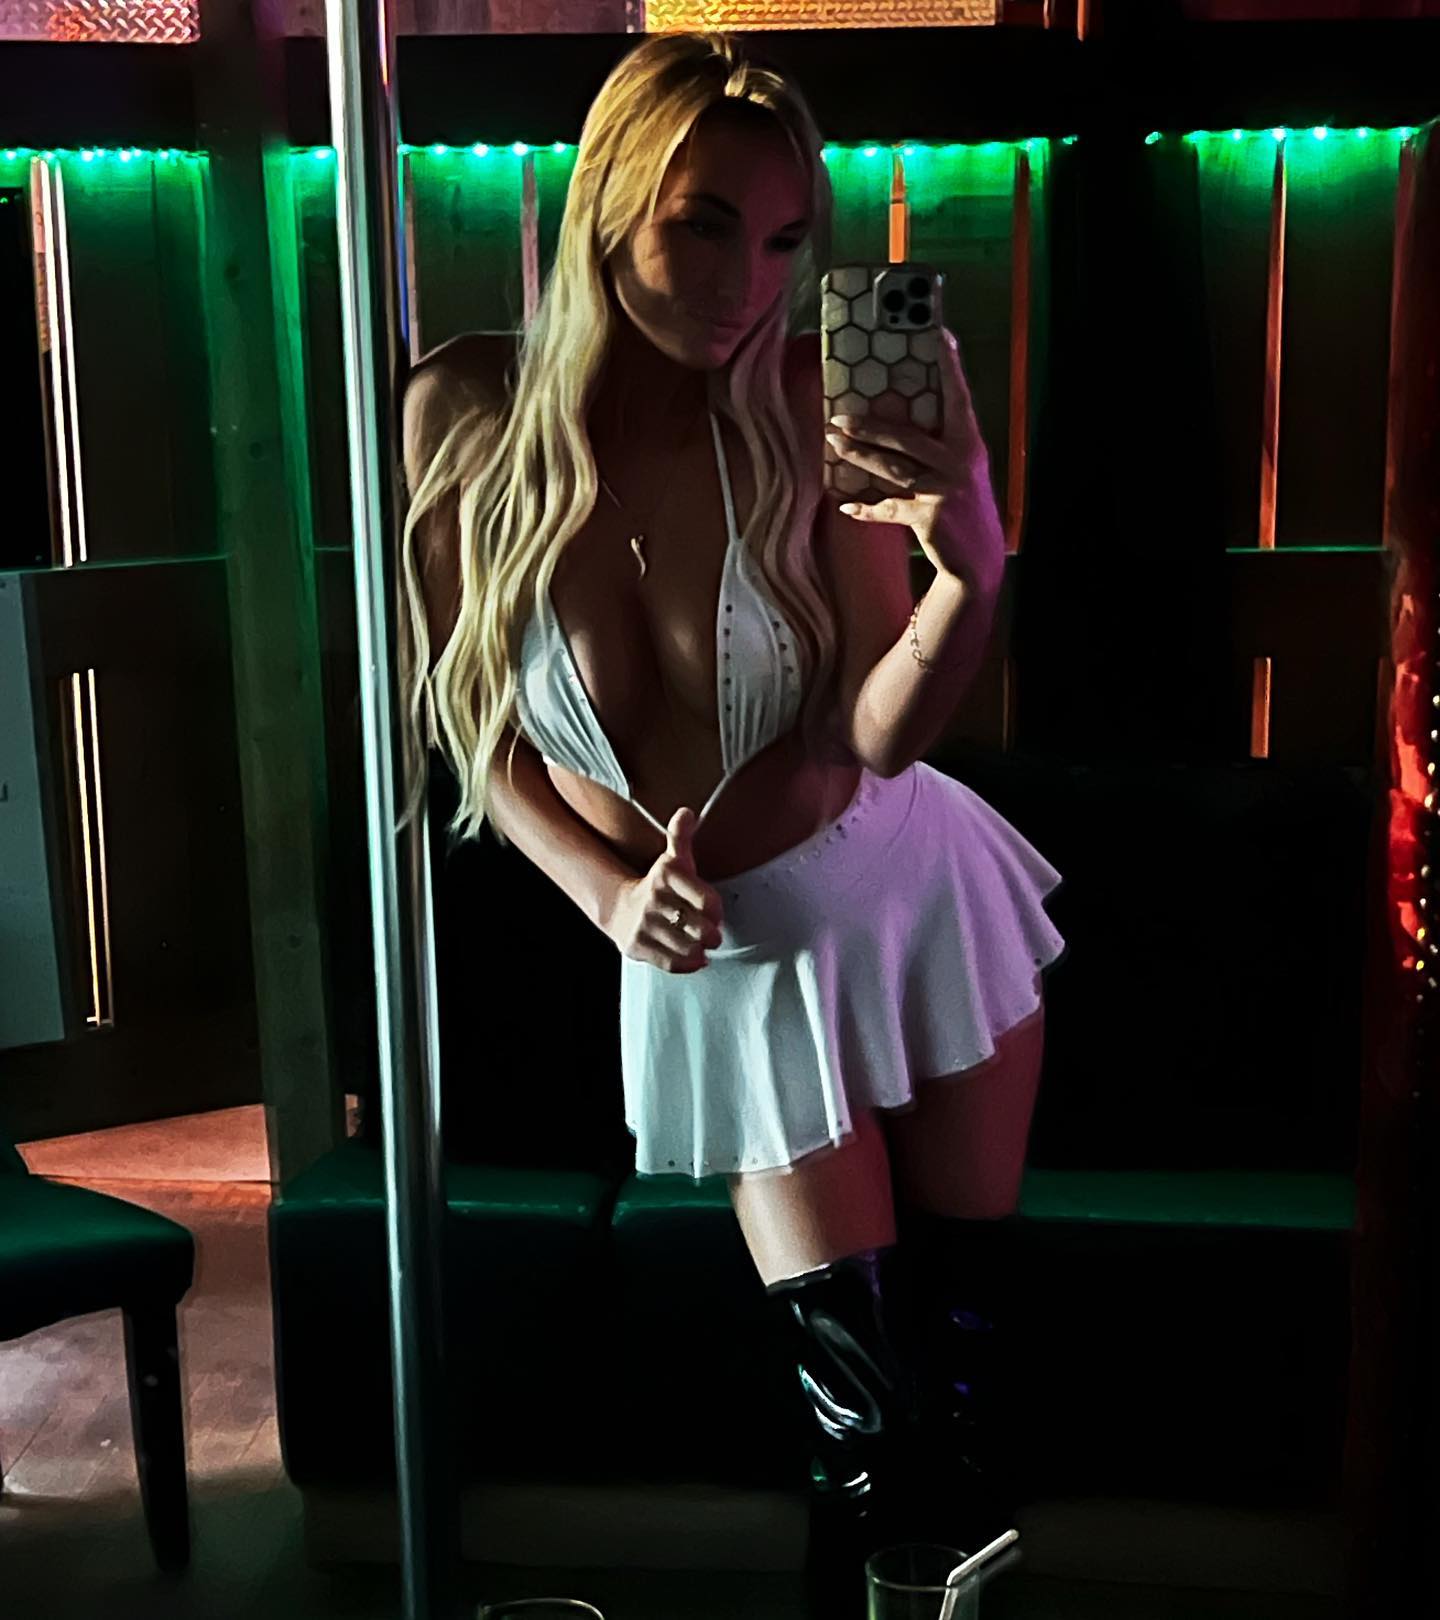 Hi baby ✨
.
.
.
.
#hibarbie #outfit #stripclub #whitegirls #blonde #sexybodies 🤍💋